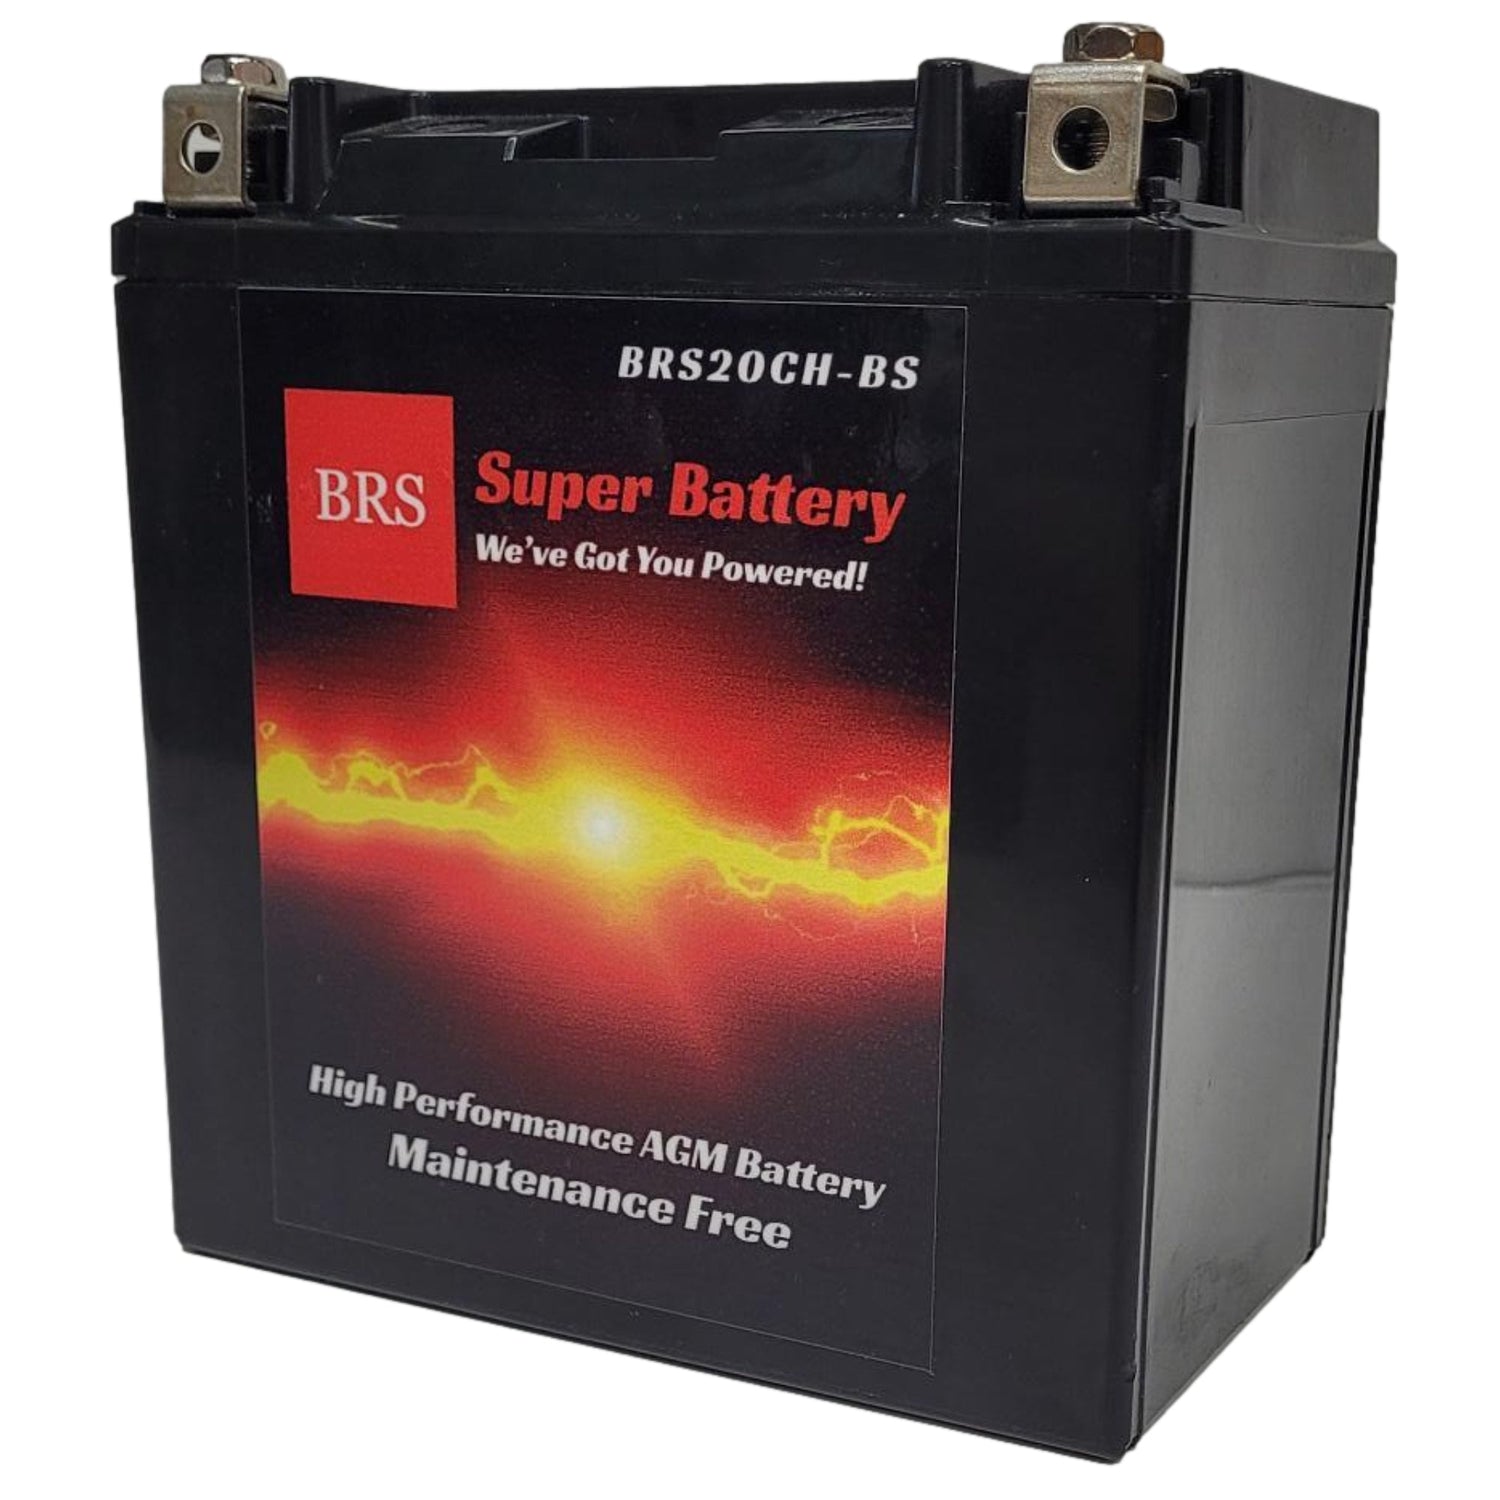 BRS20CH-BS 12v 20AH 270CCA 30 Day Warranty - BRS Super Battery